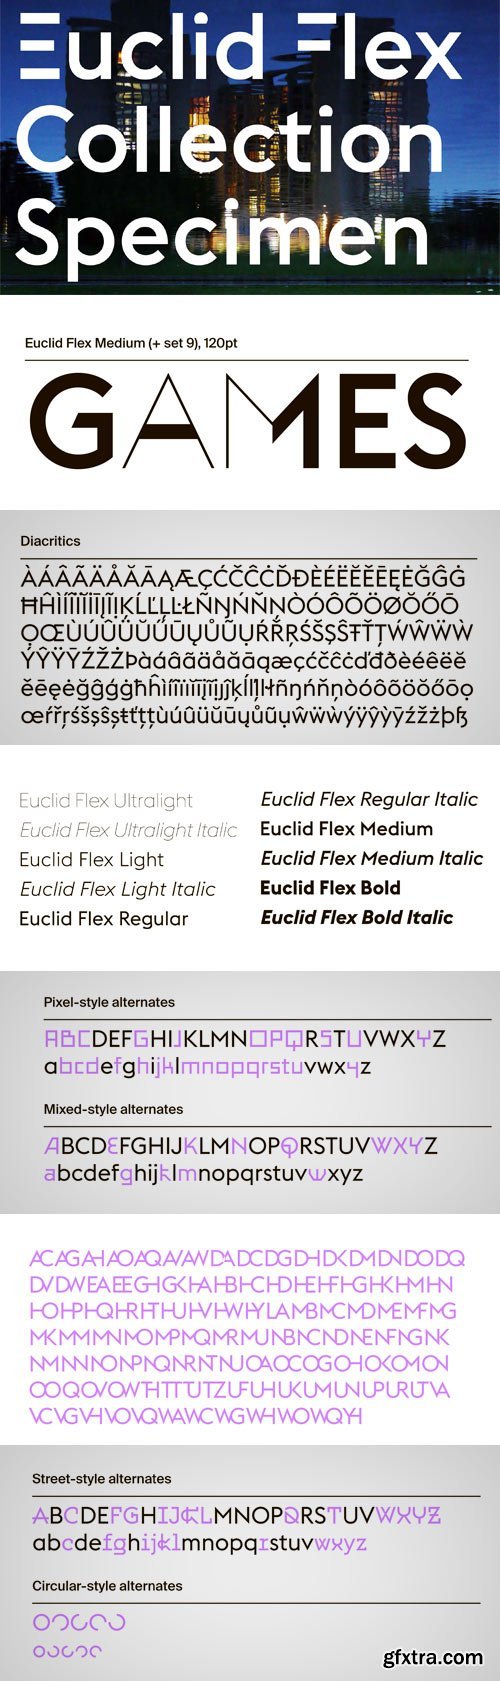 Euclid Flex Font Family - 10 Fonts for €375